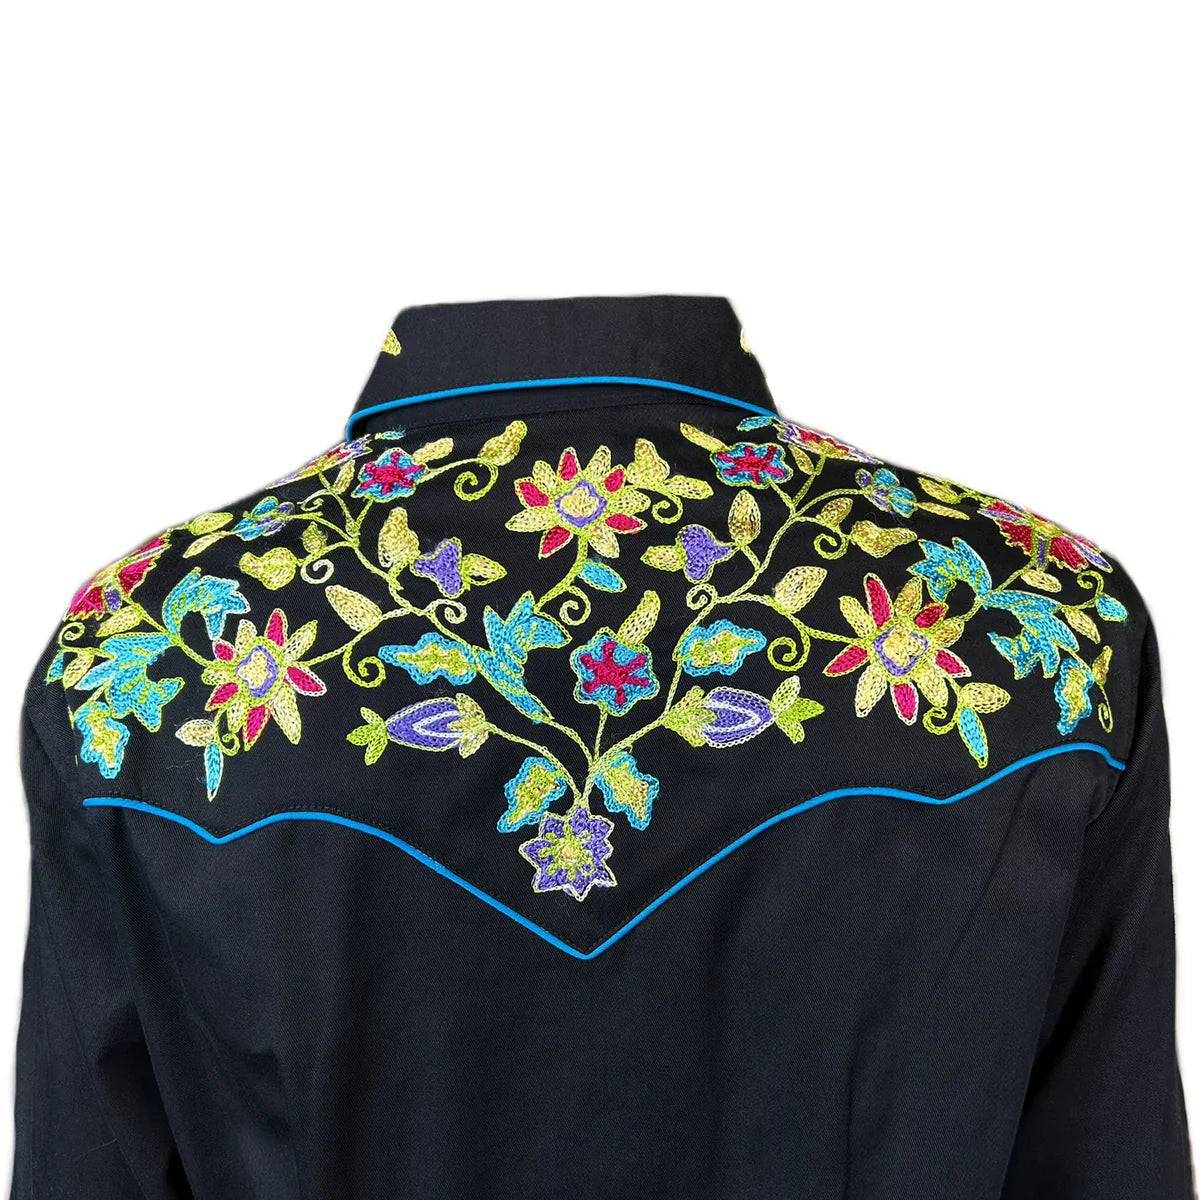 Vintage Inspired Western Shirt Ladies Rockmount Floral Embroidery Black Back